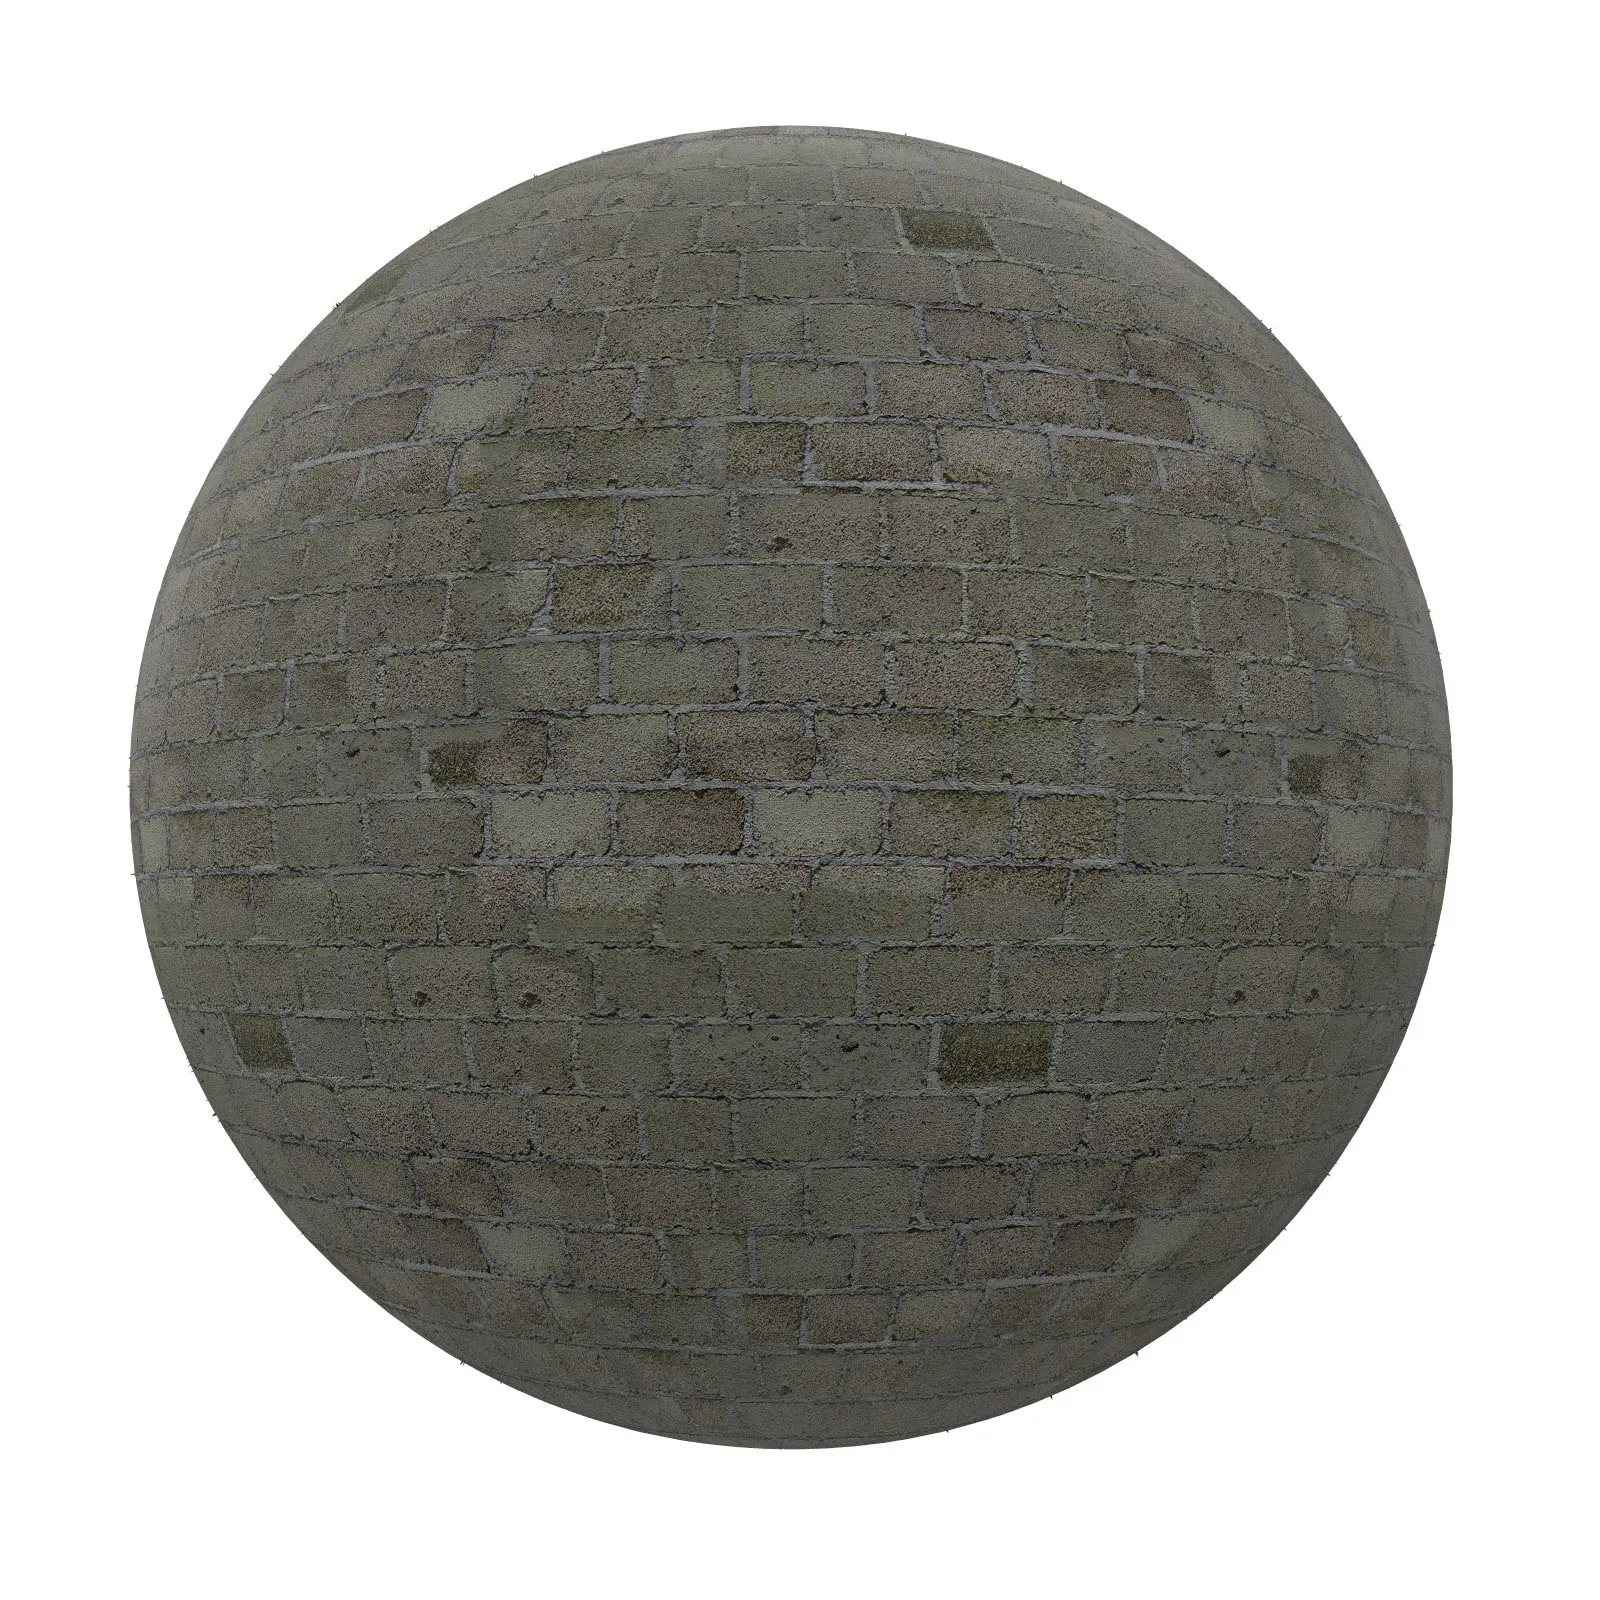 PBR CGAXIS TEXTURES – BRICK – Dark Stone Brick Wall